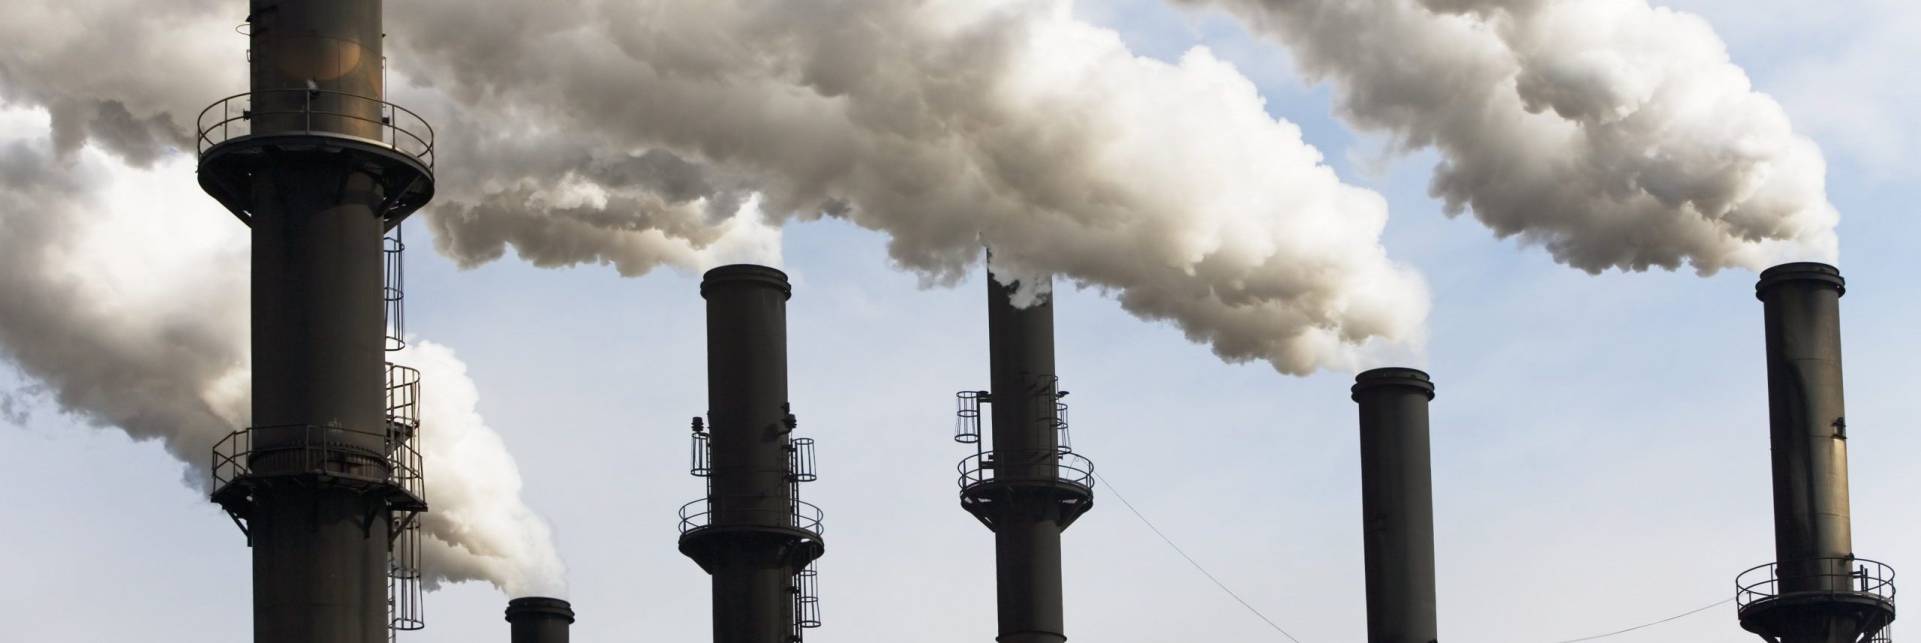 smoke stack industrial environmental monitoring scaled